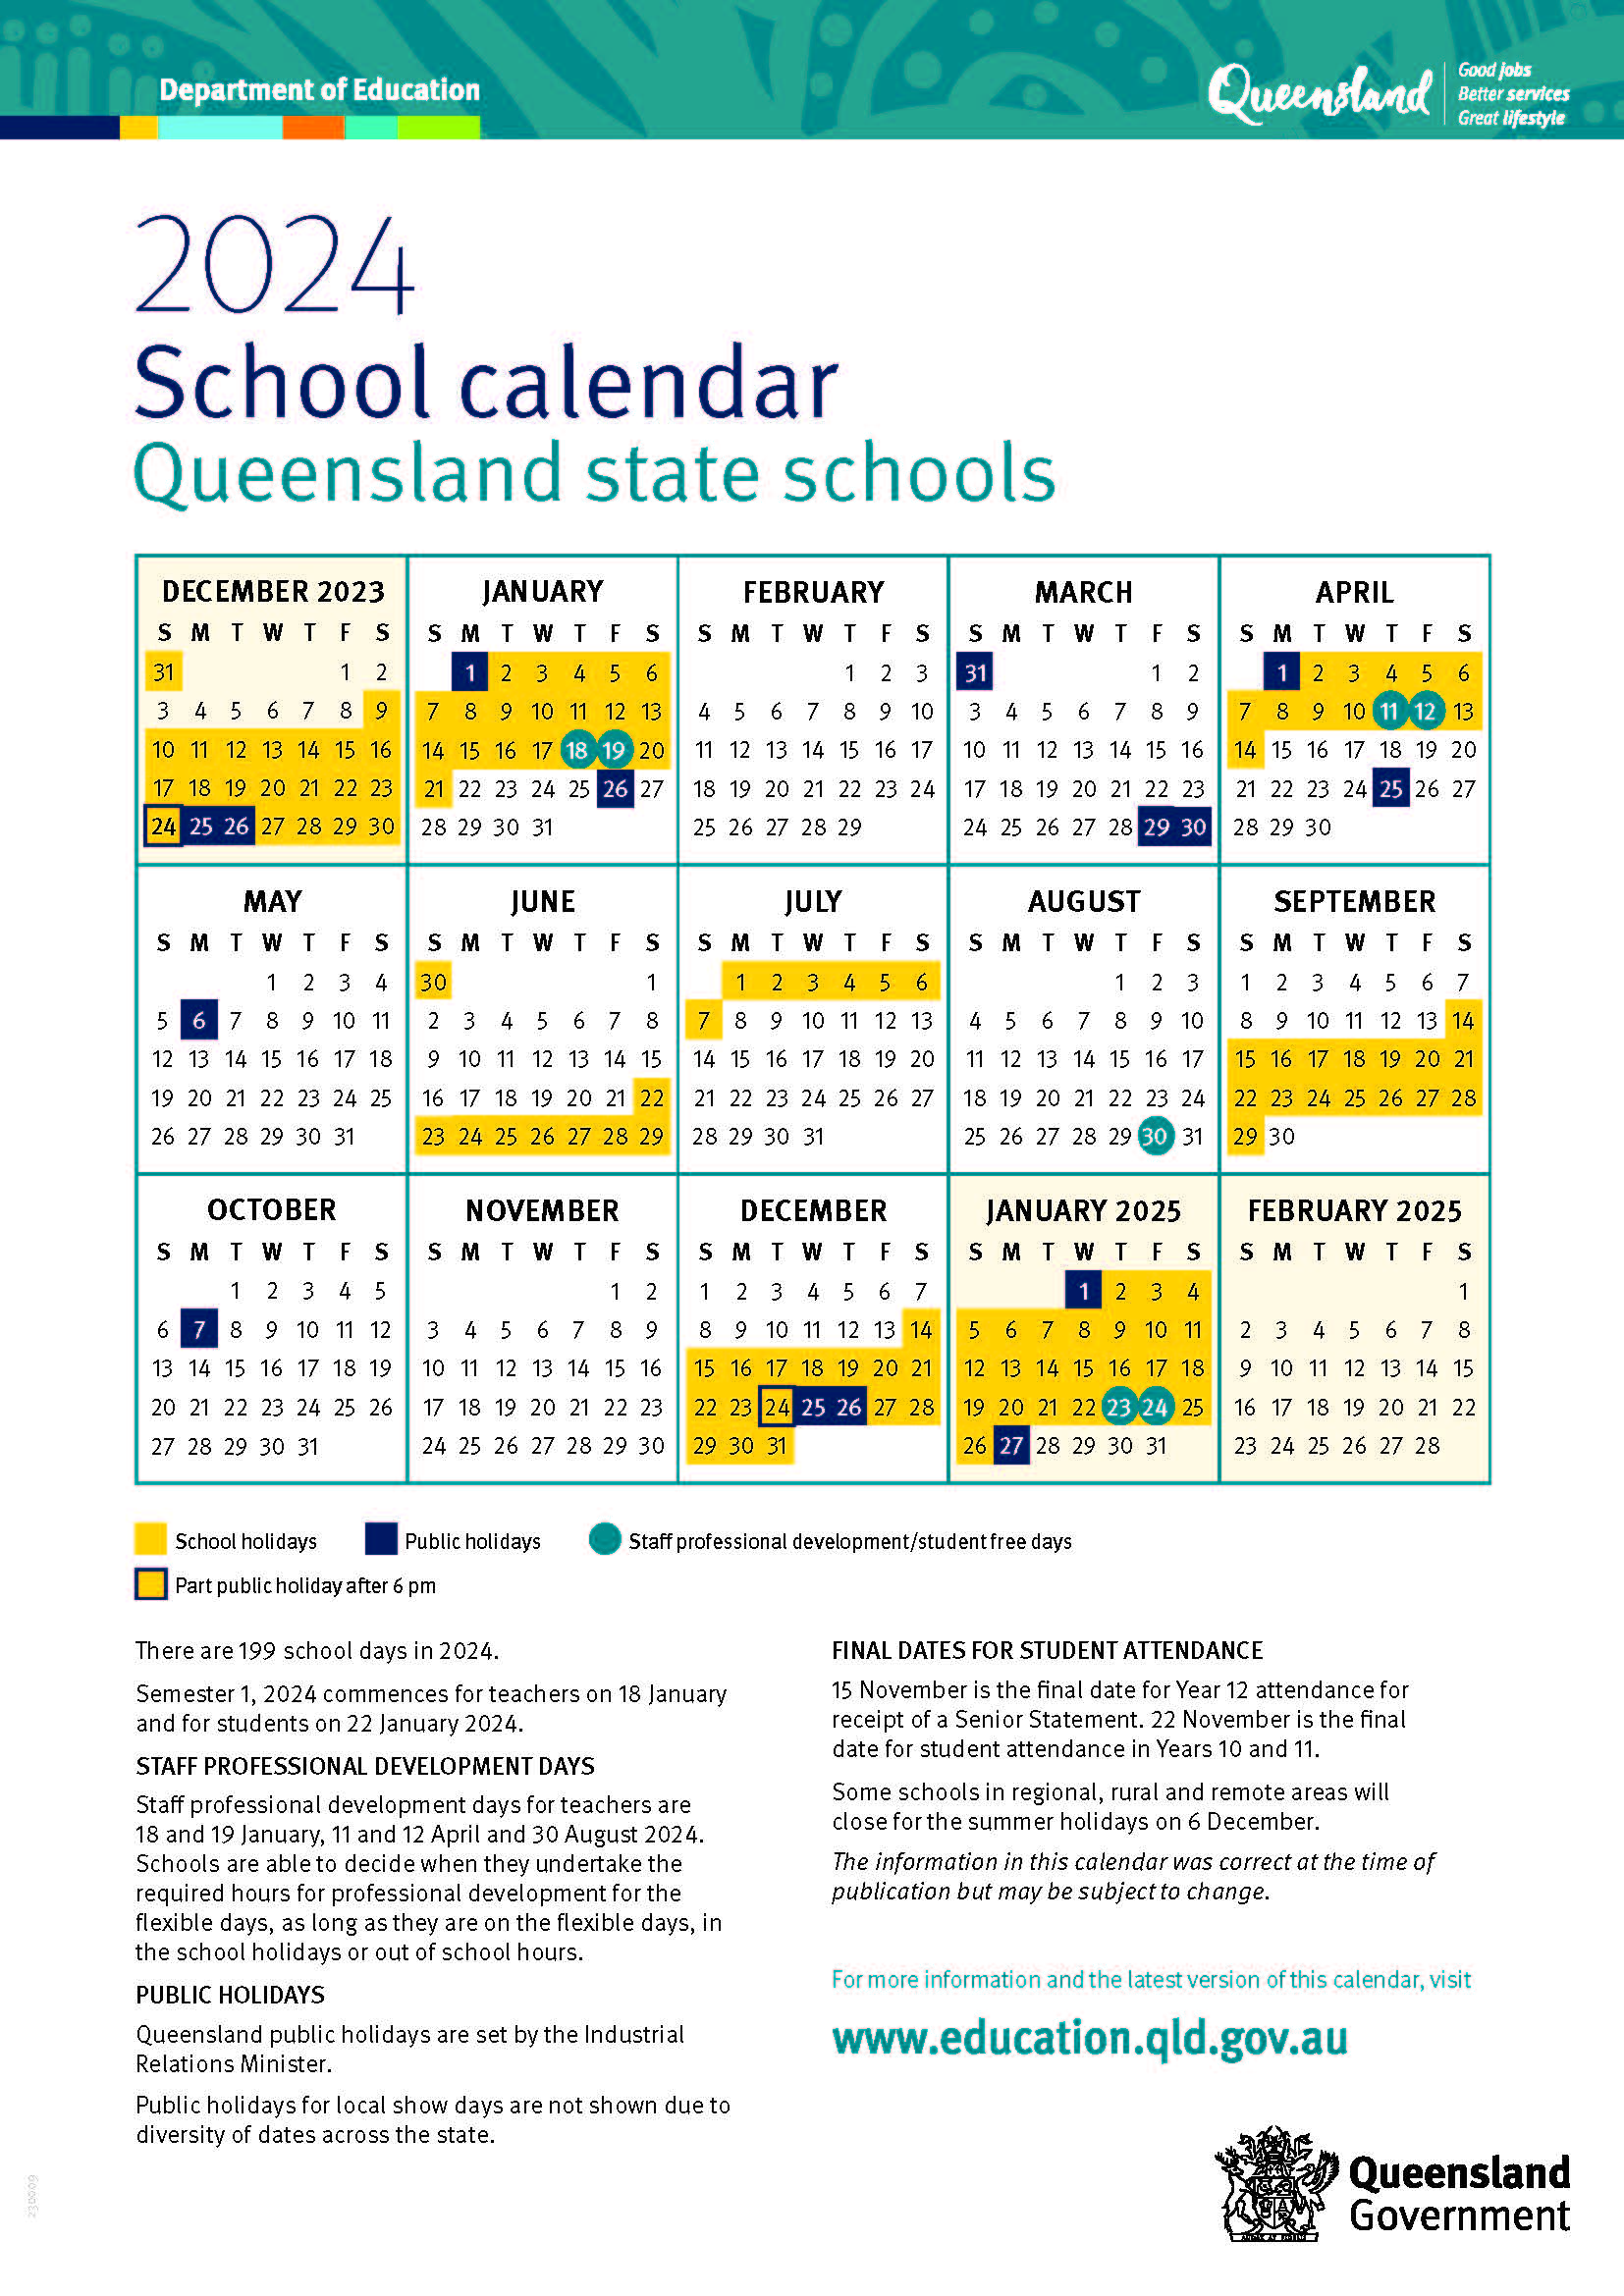 2024 School Calendar.jpg